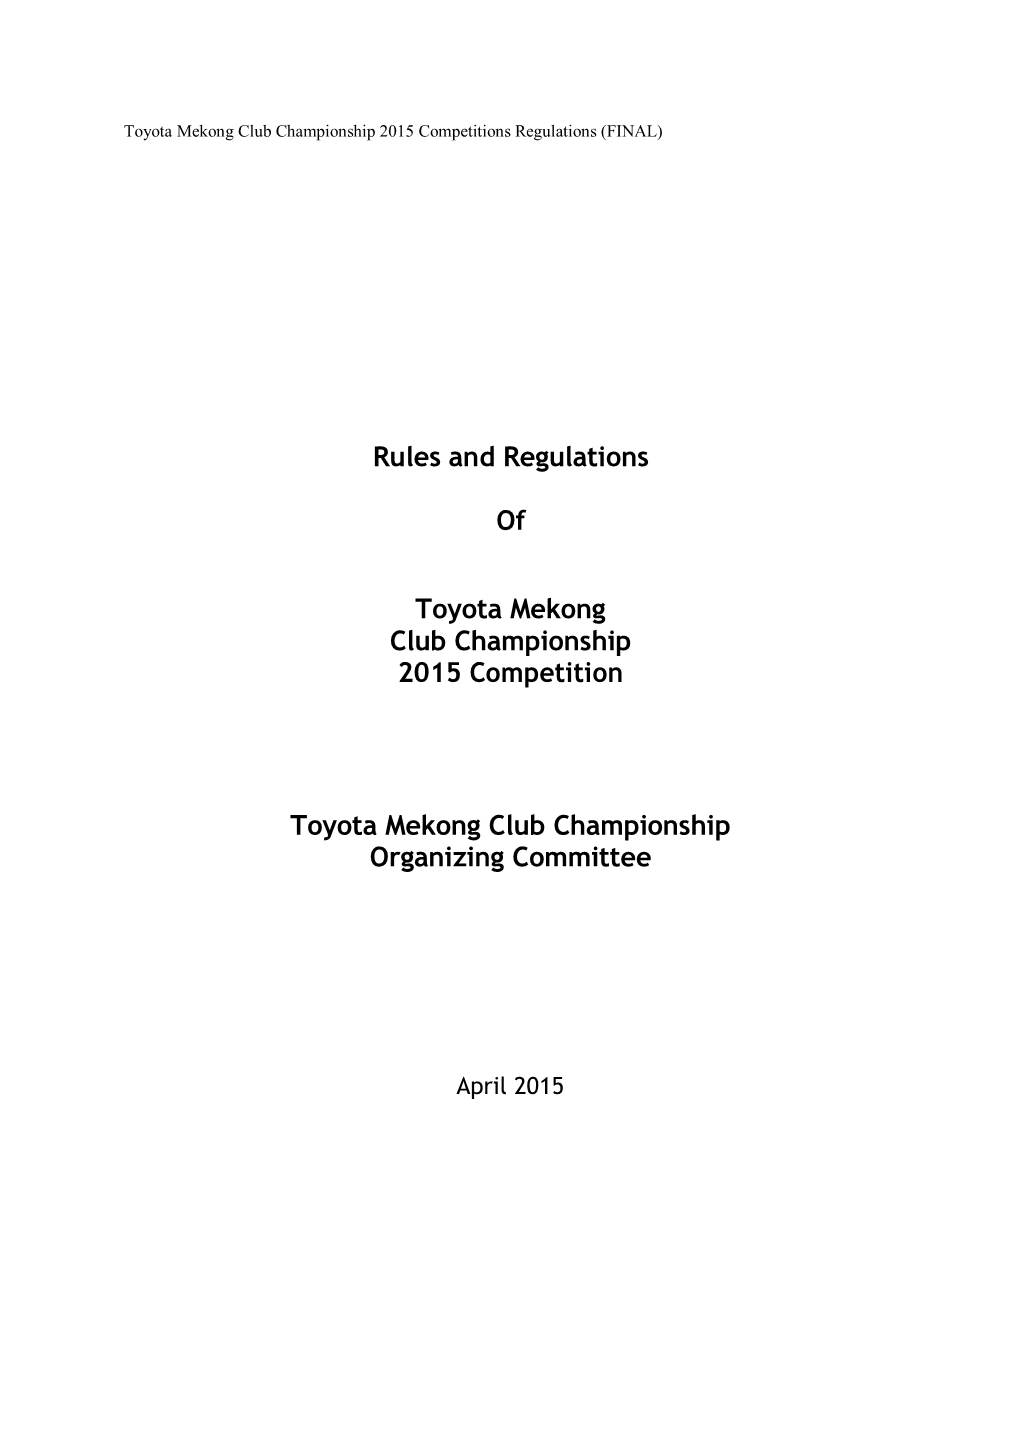 EAFF EAC&WEAC 2015 Finals Regulations